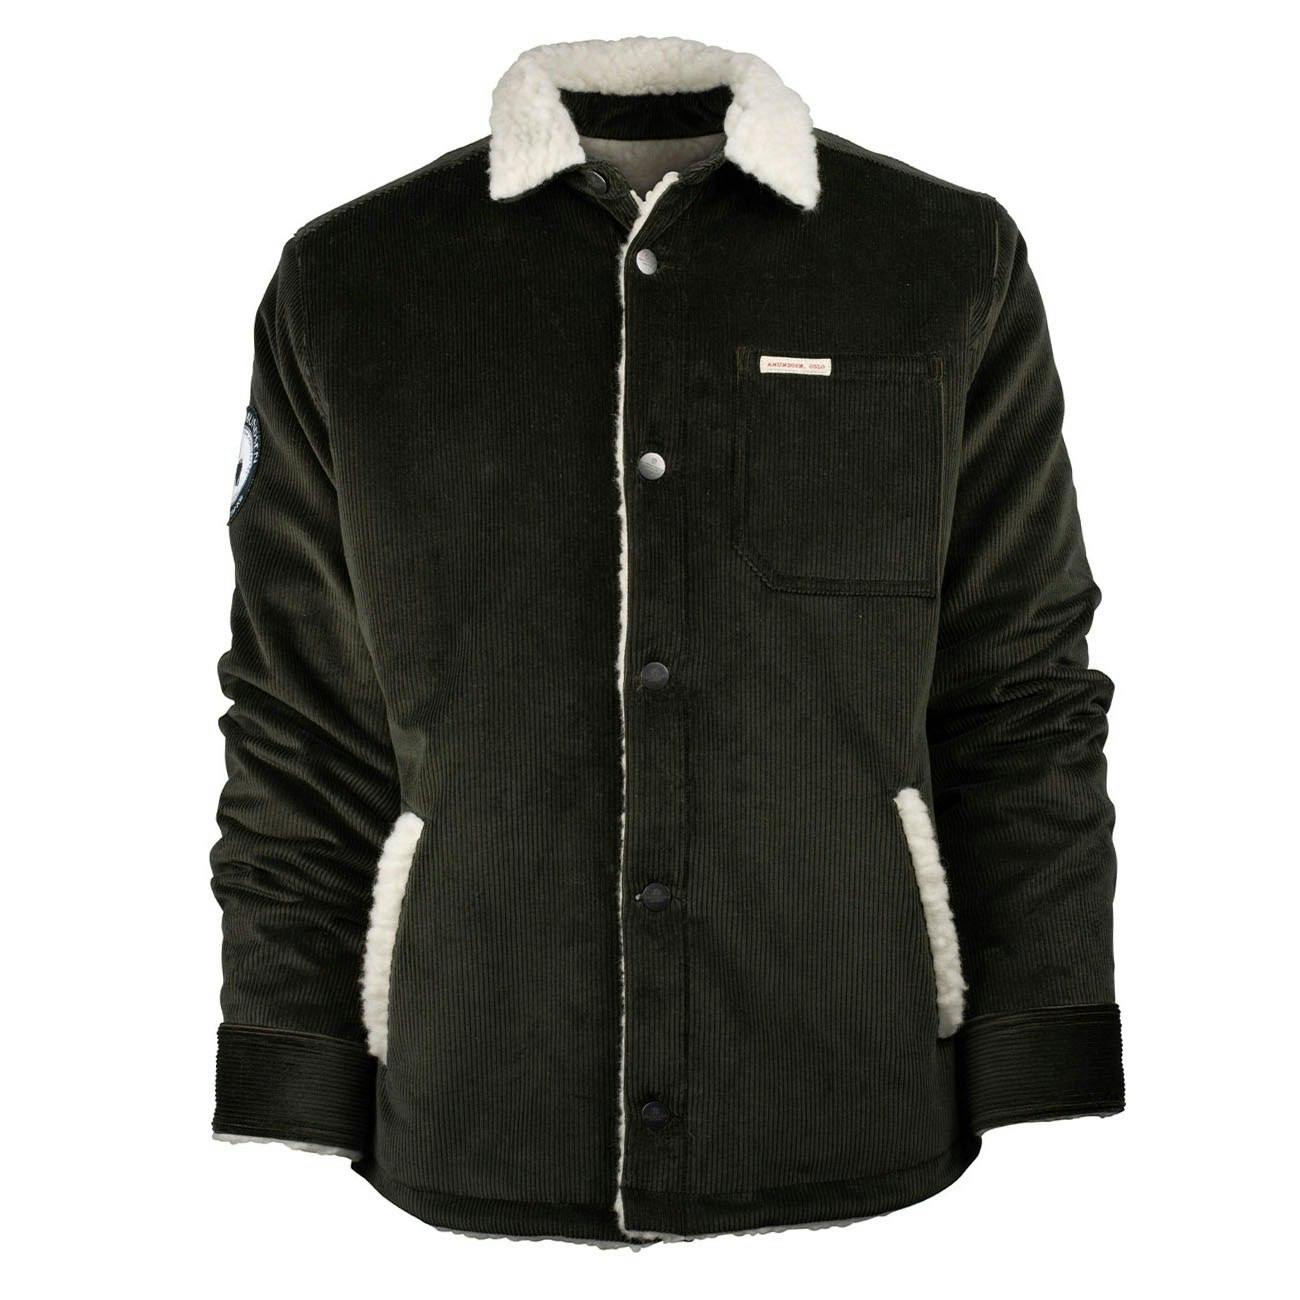 Harvester Sherpa Fleece Overshirt Jacket